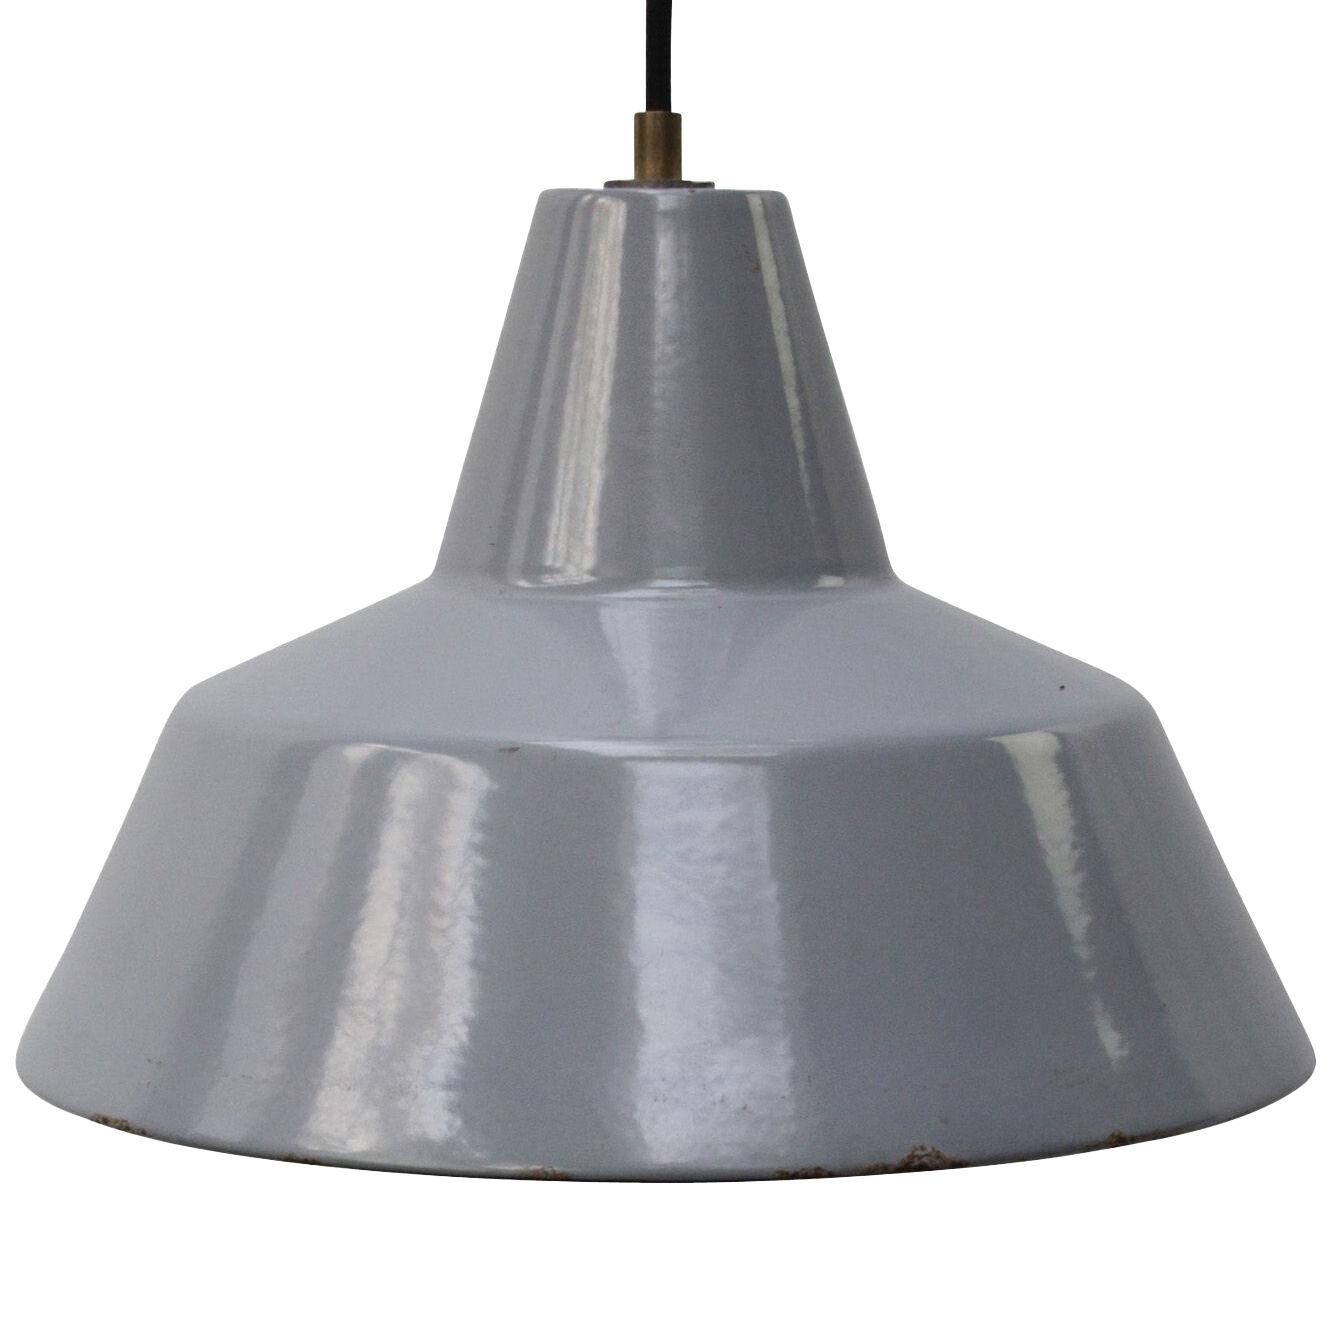 Vintage Dutch Industrial Gray Enamel Hanging Lamps Pendants by Philips